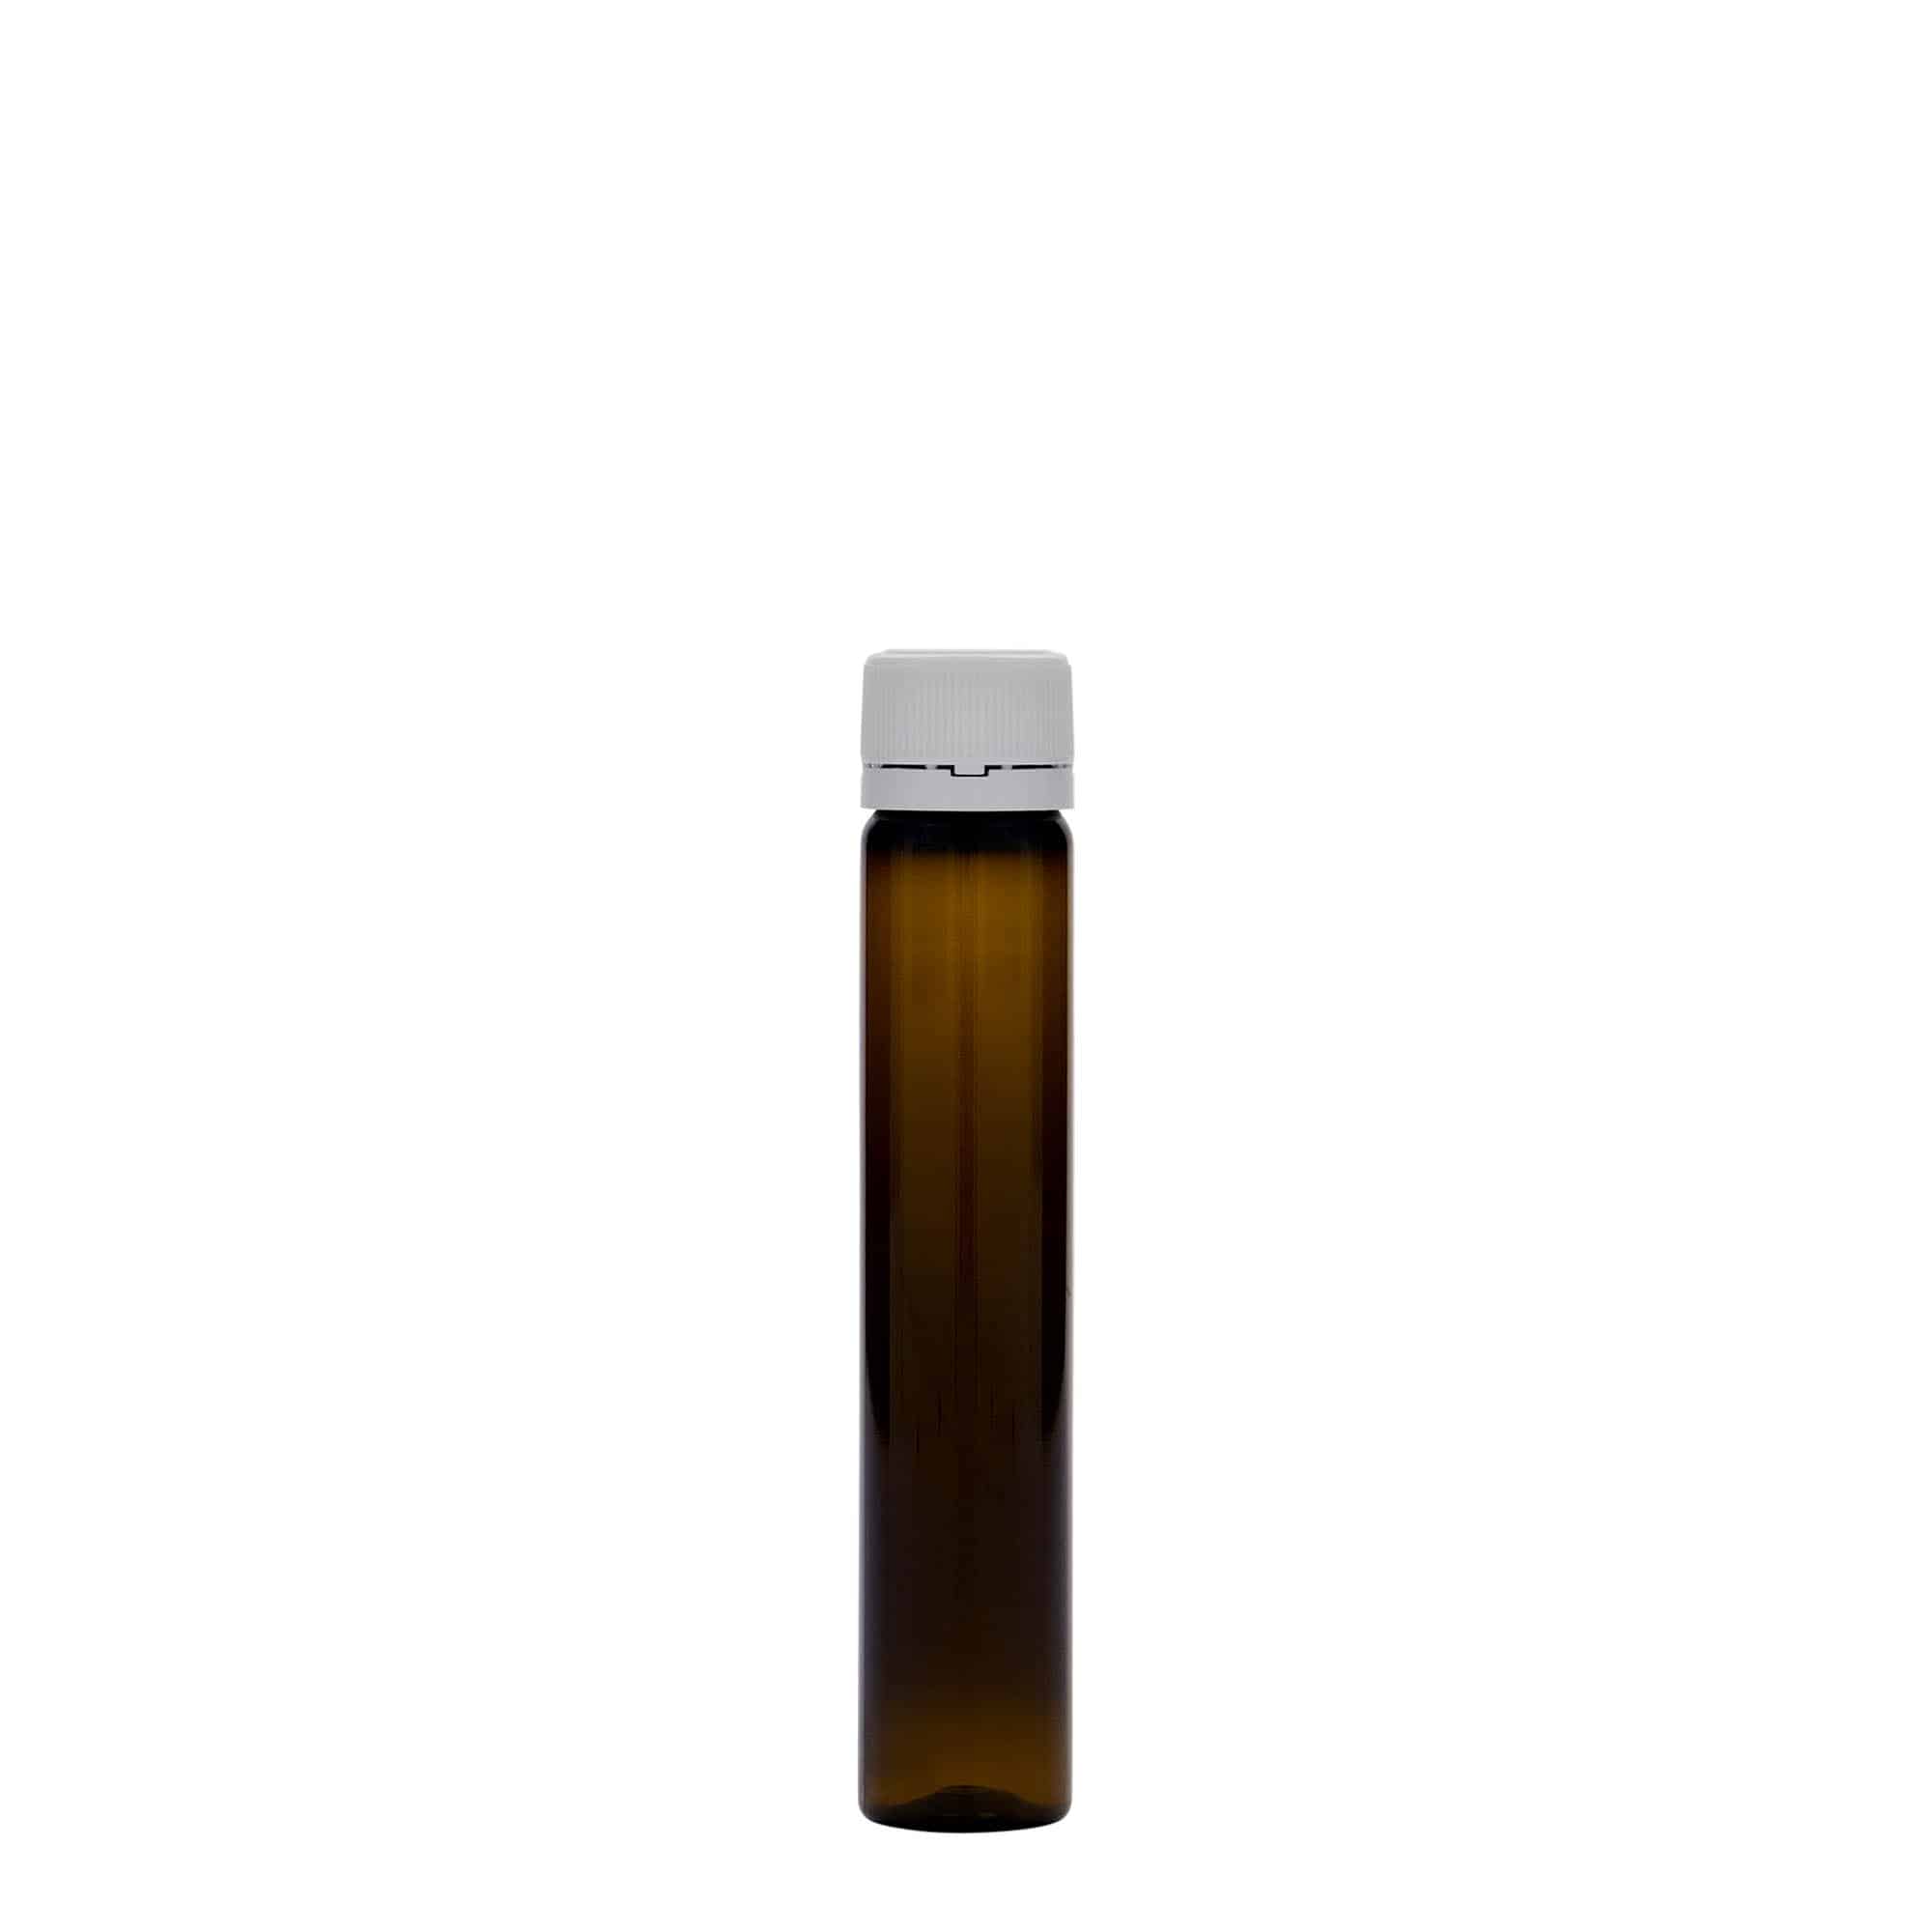 25 ml PET tube, plastic, brown, closure: screw cap